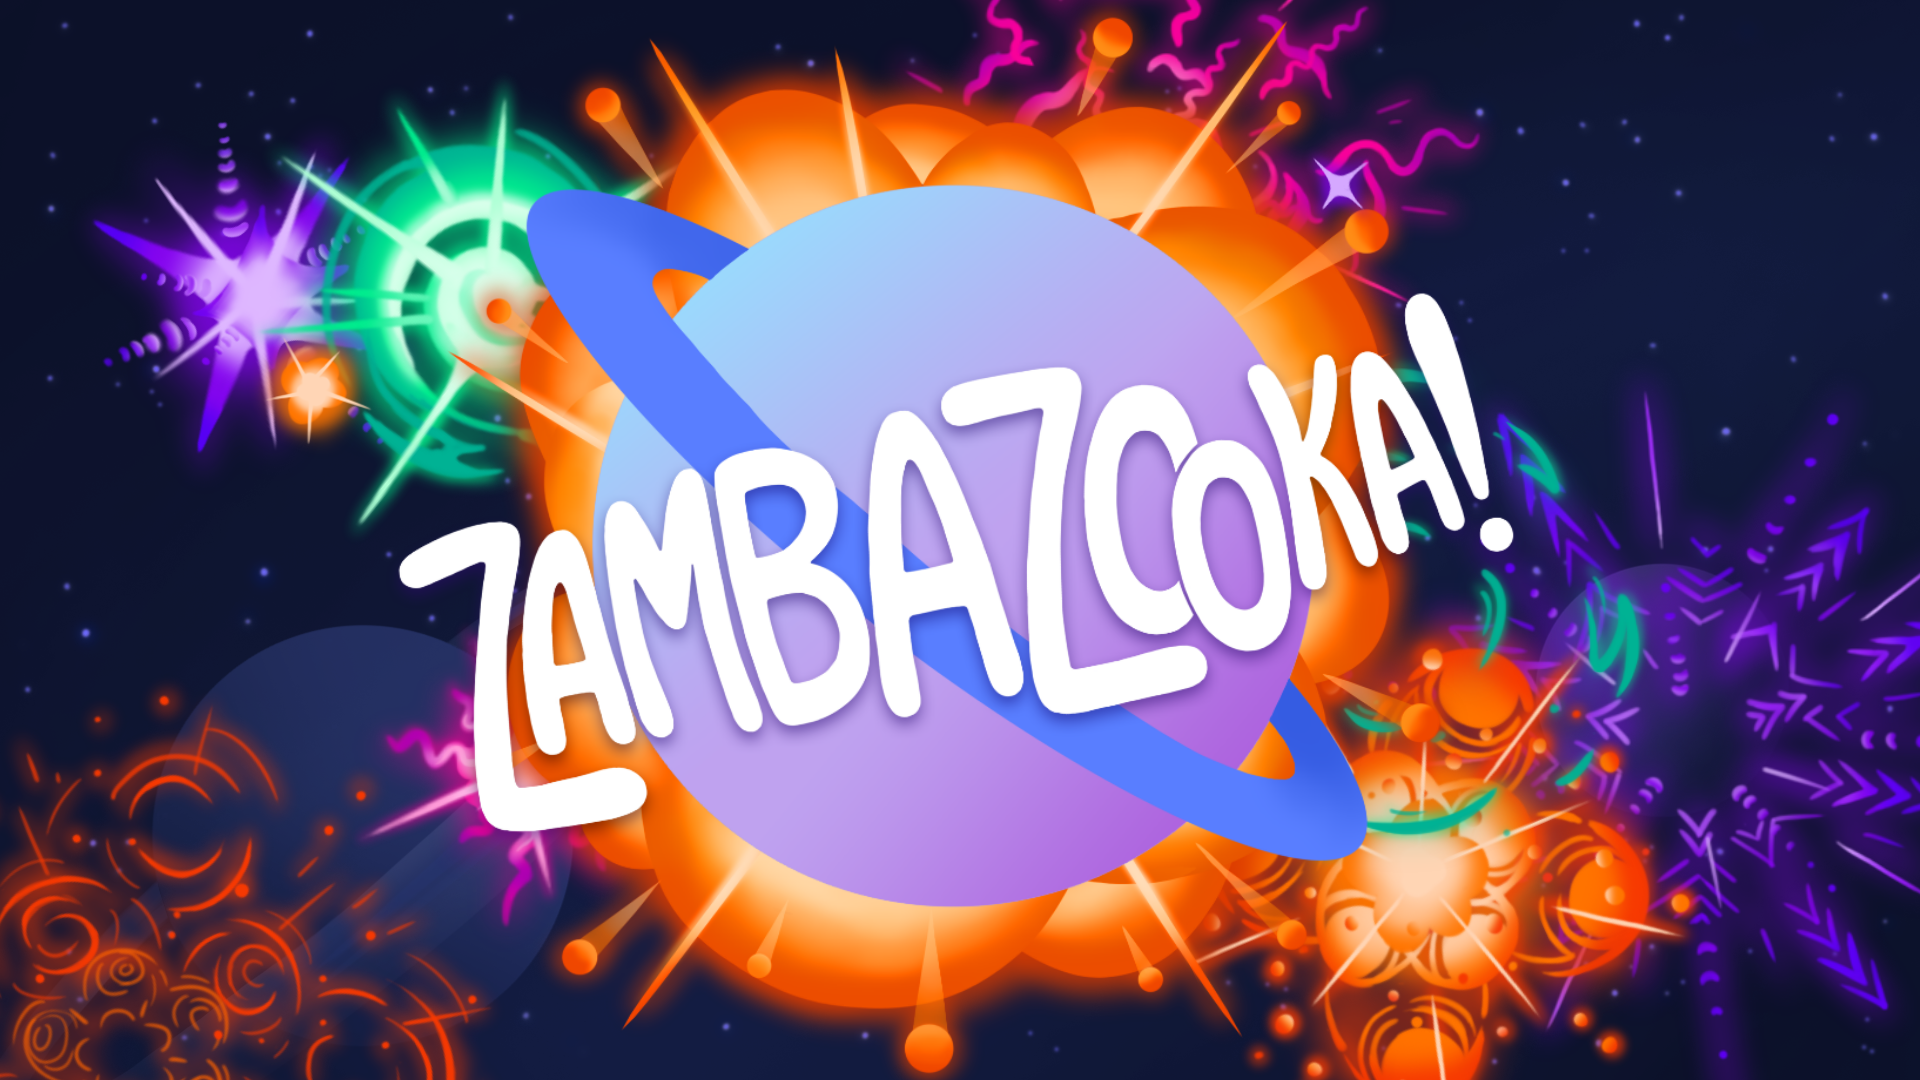 Zambazooka